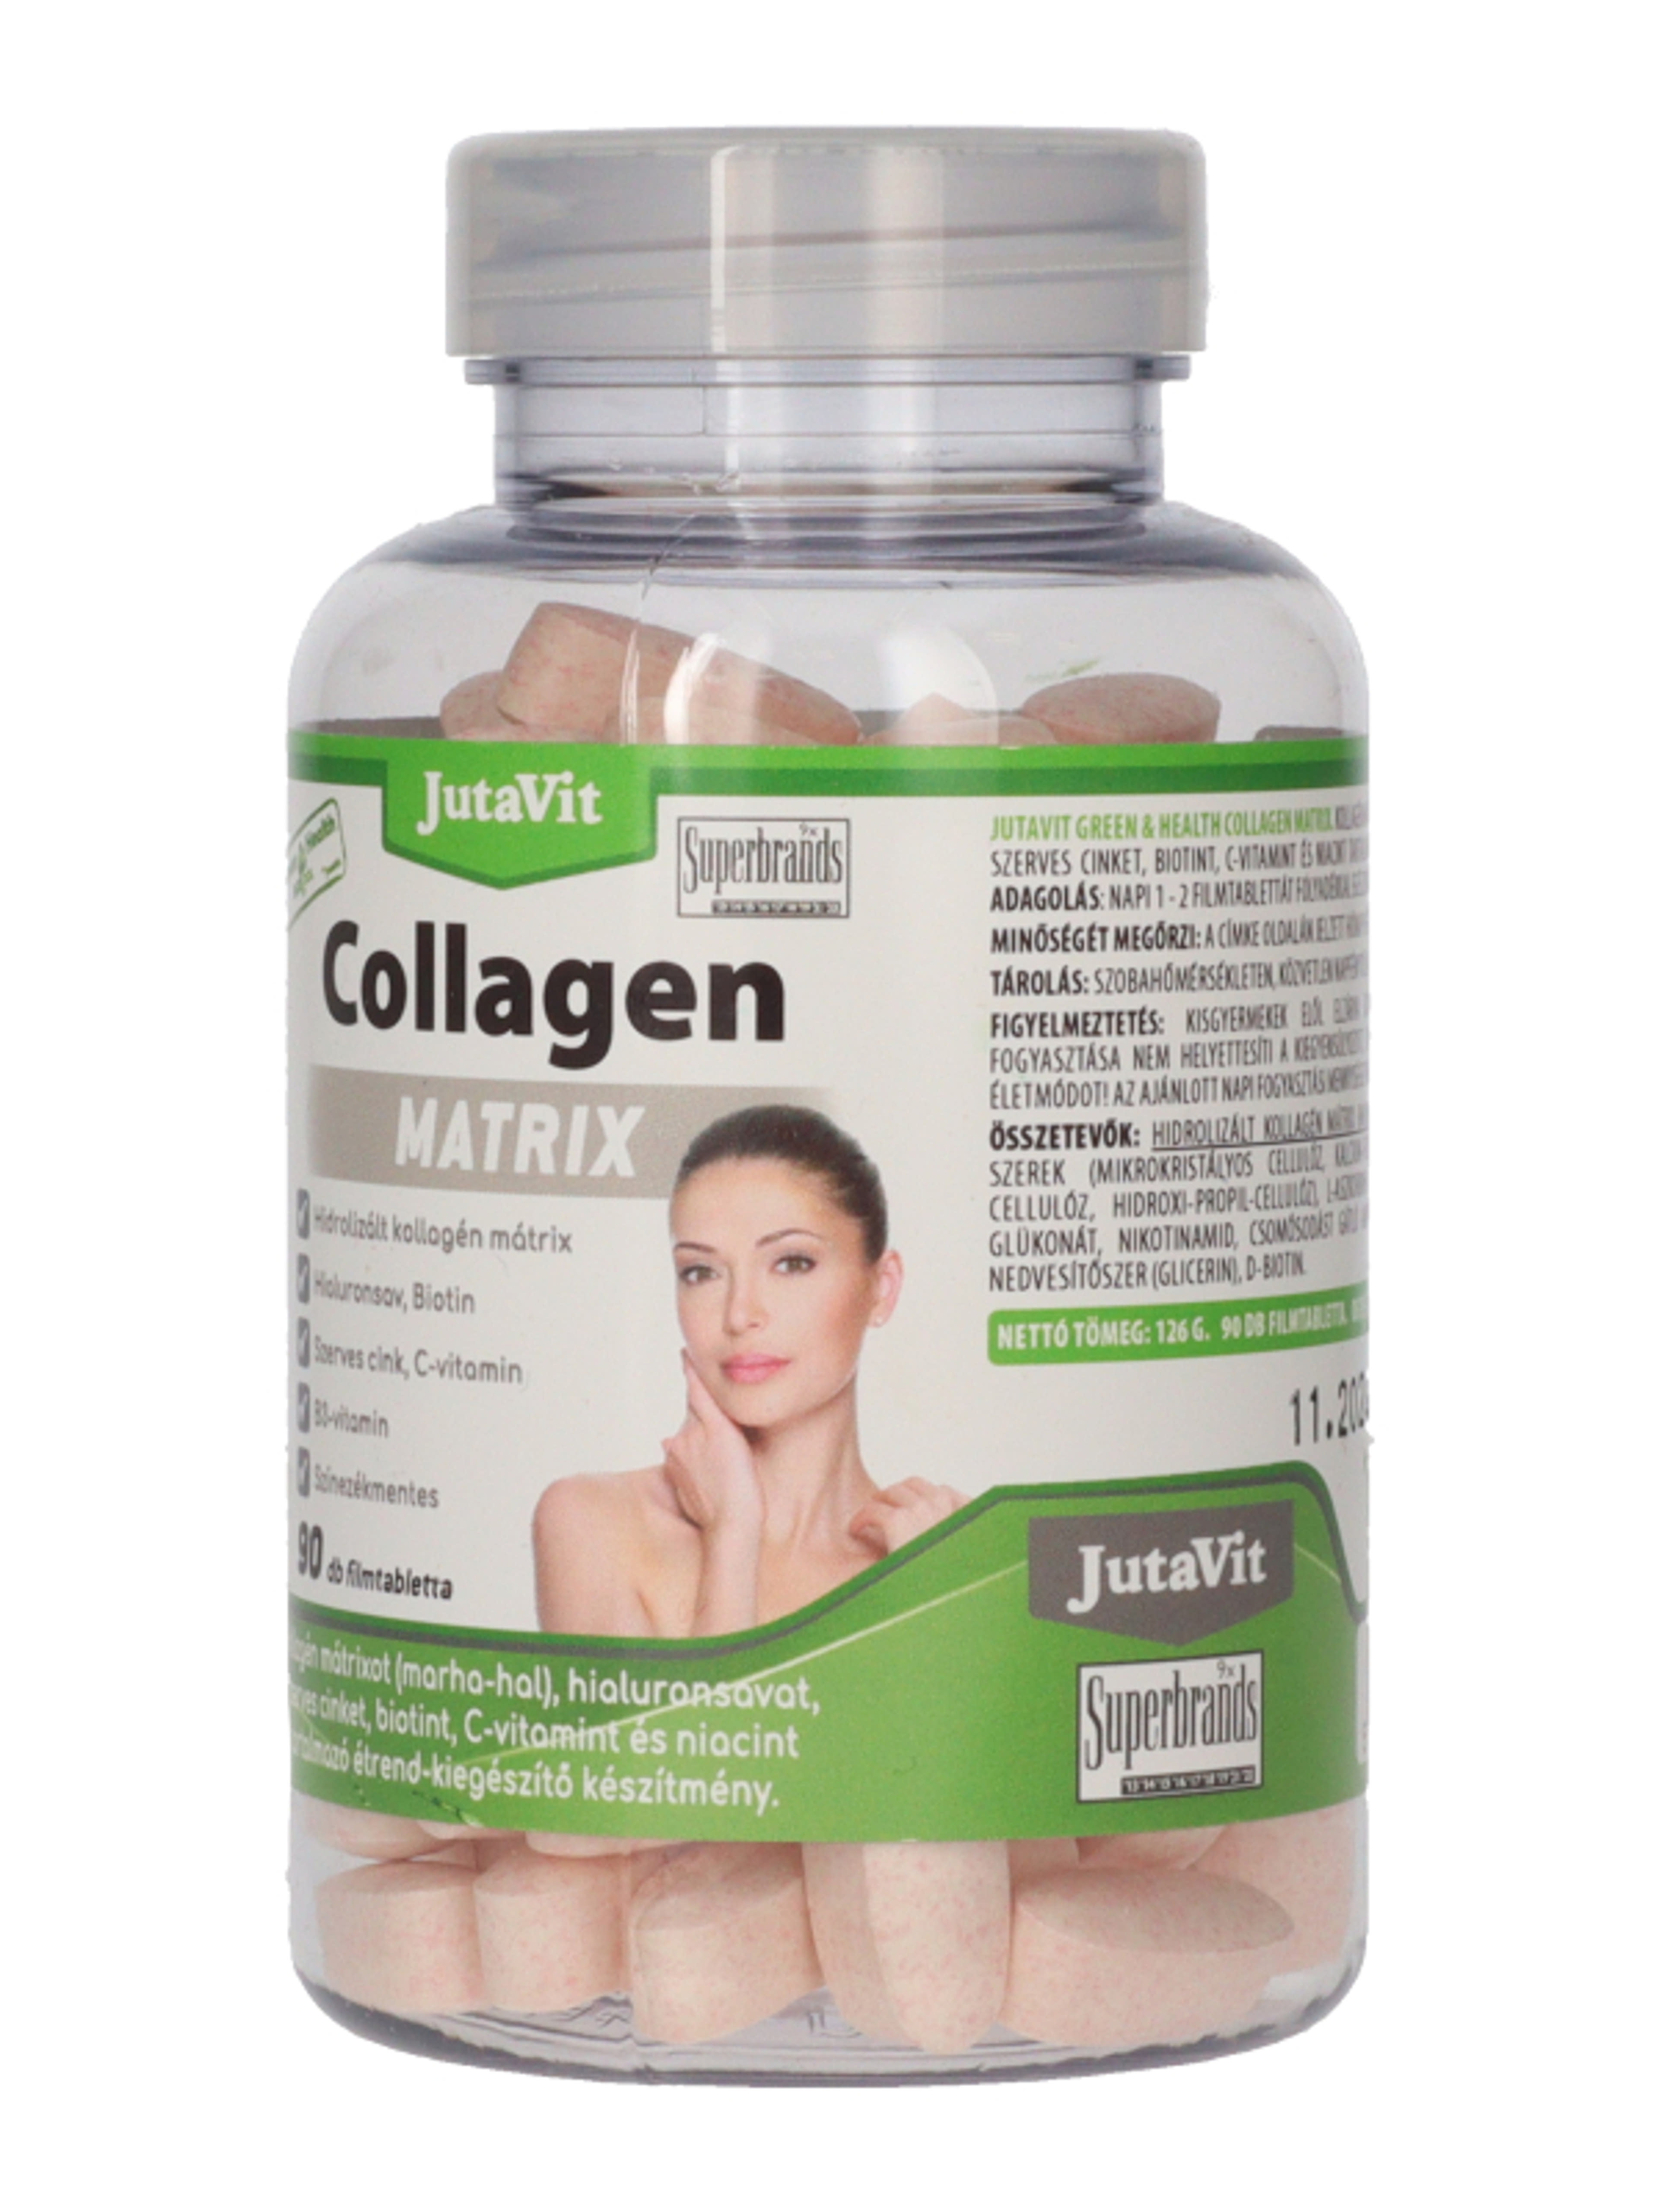 Jutavit Green&Health Collagen Matrix étrend-kiegészítő filmtabletta - 90 db-3